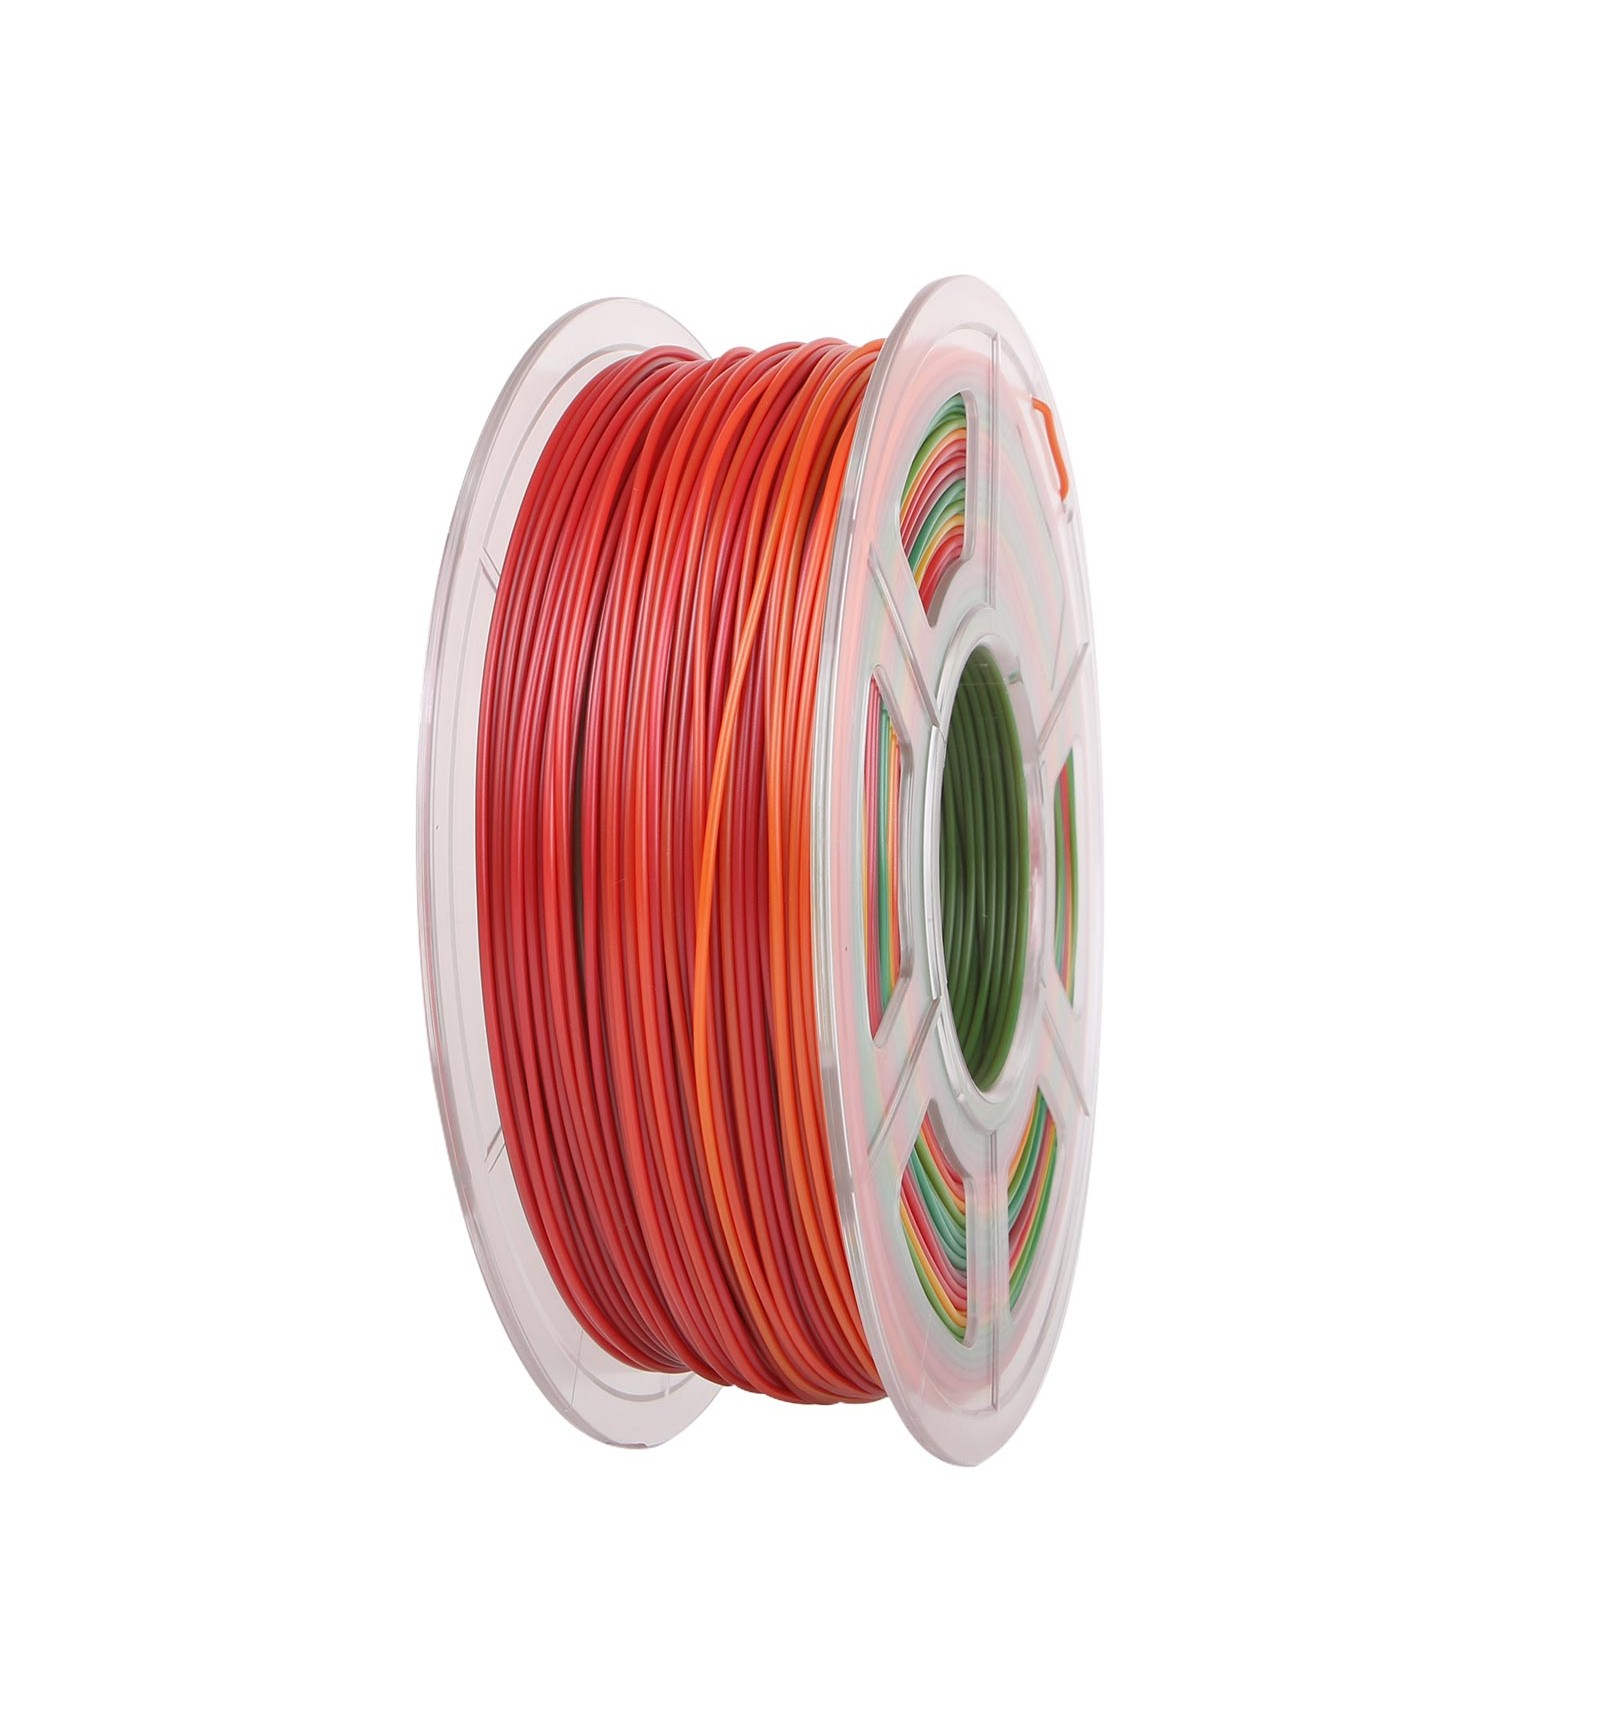 Sunlu PETG 3D Filament 1.75mm 1kg